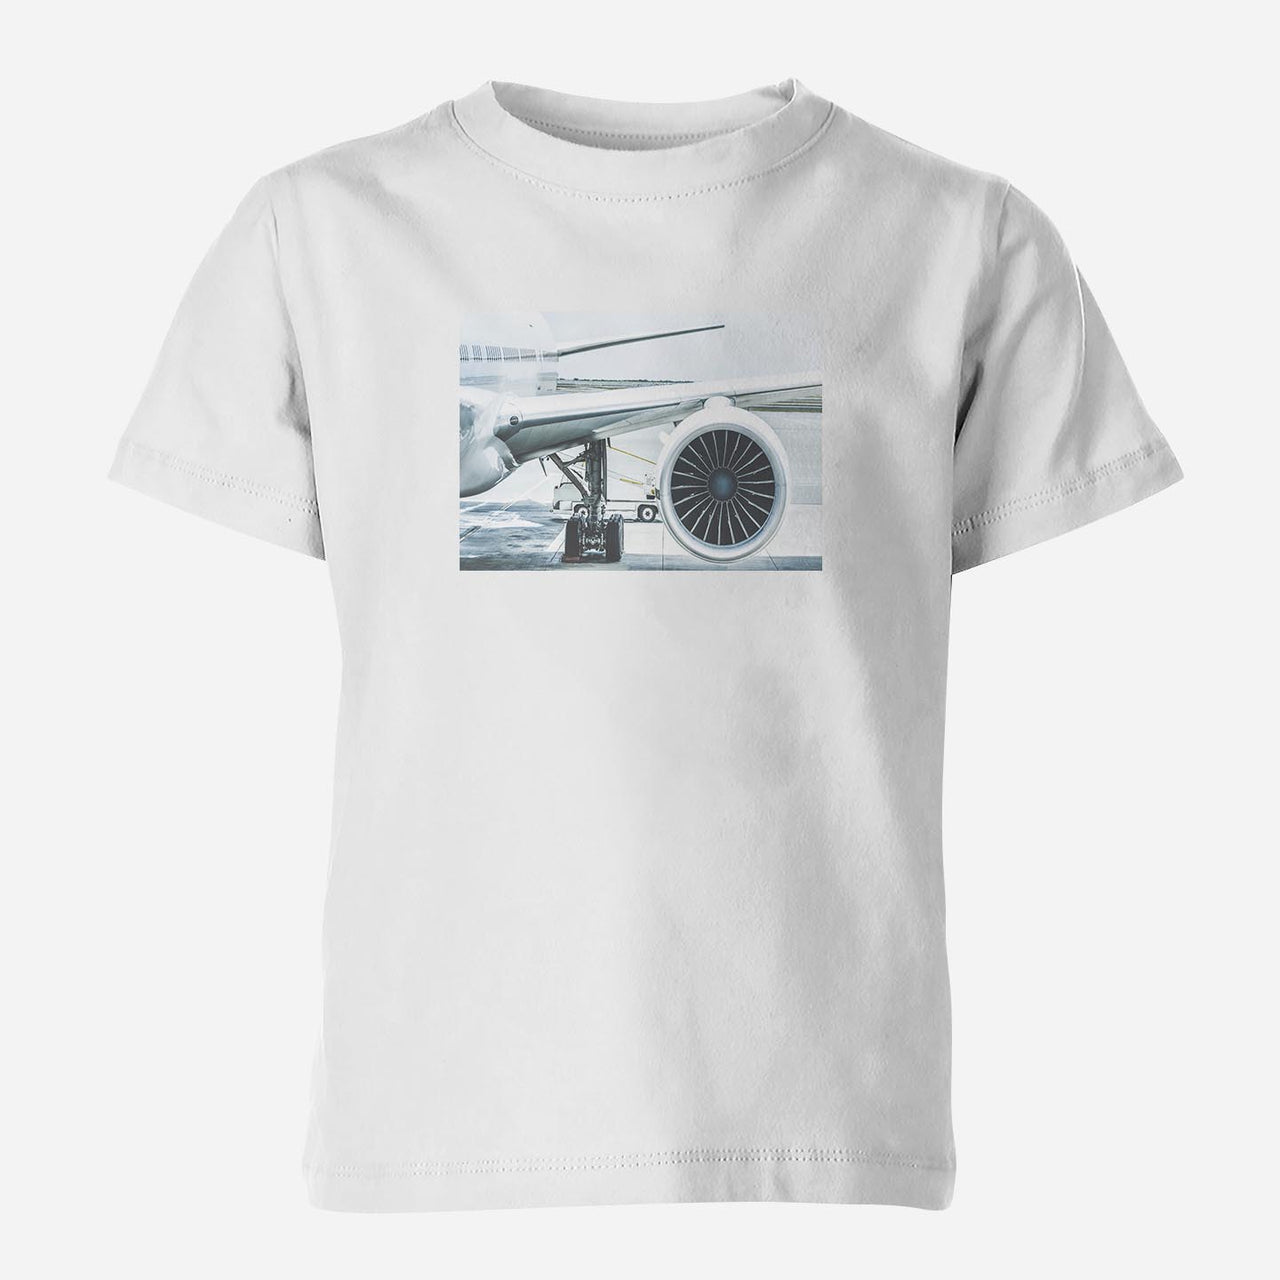 Amazing Aircraft & Engine Designed Children T-Shirts